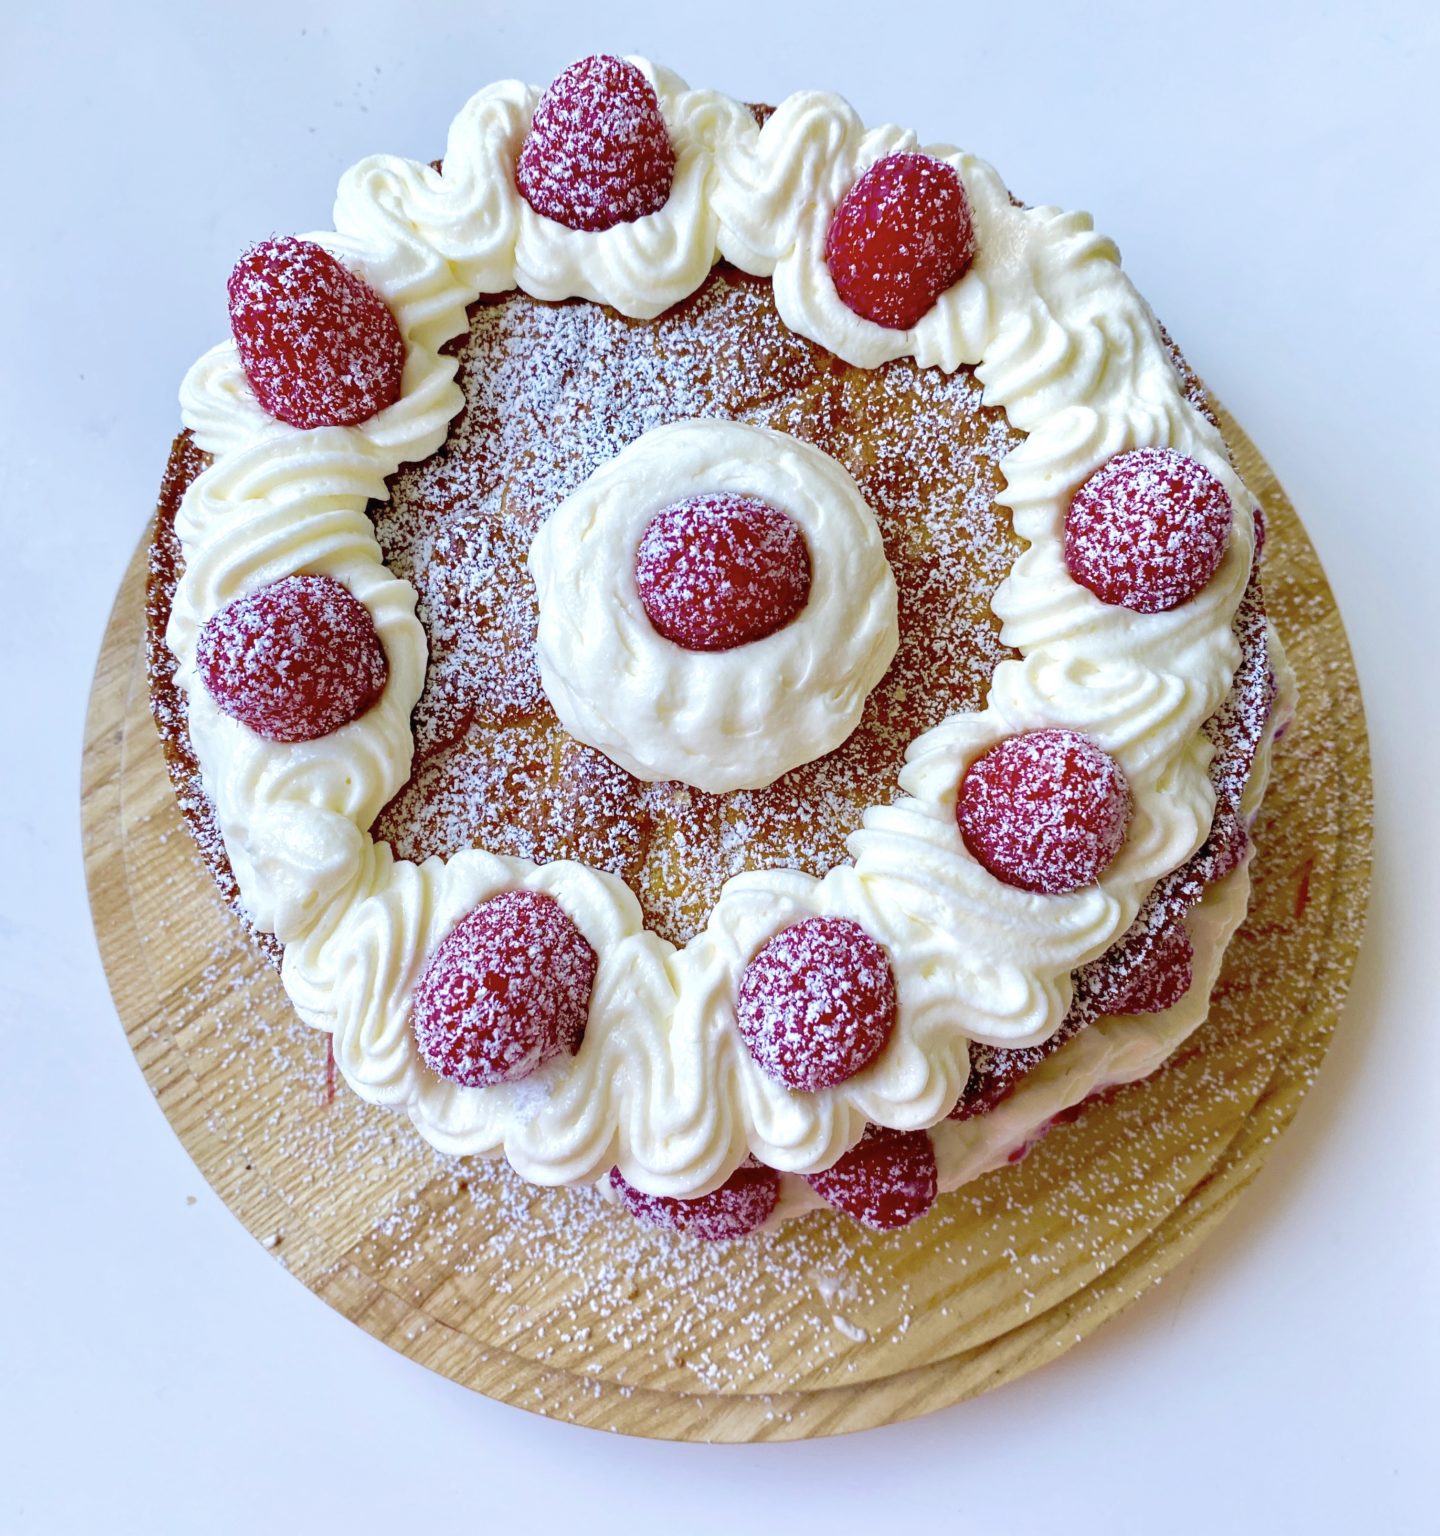 raspberry victoria sponge cake